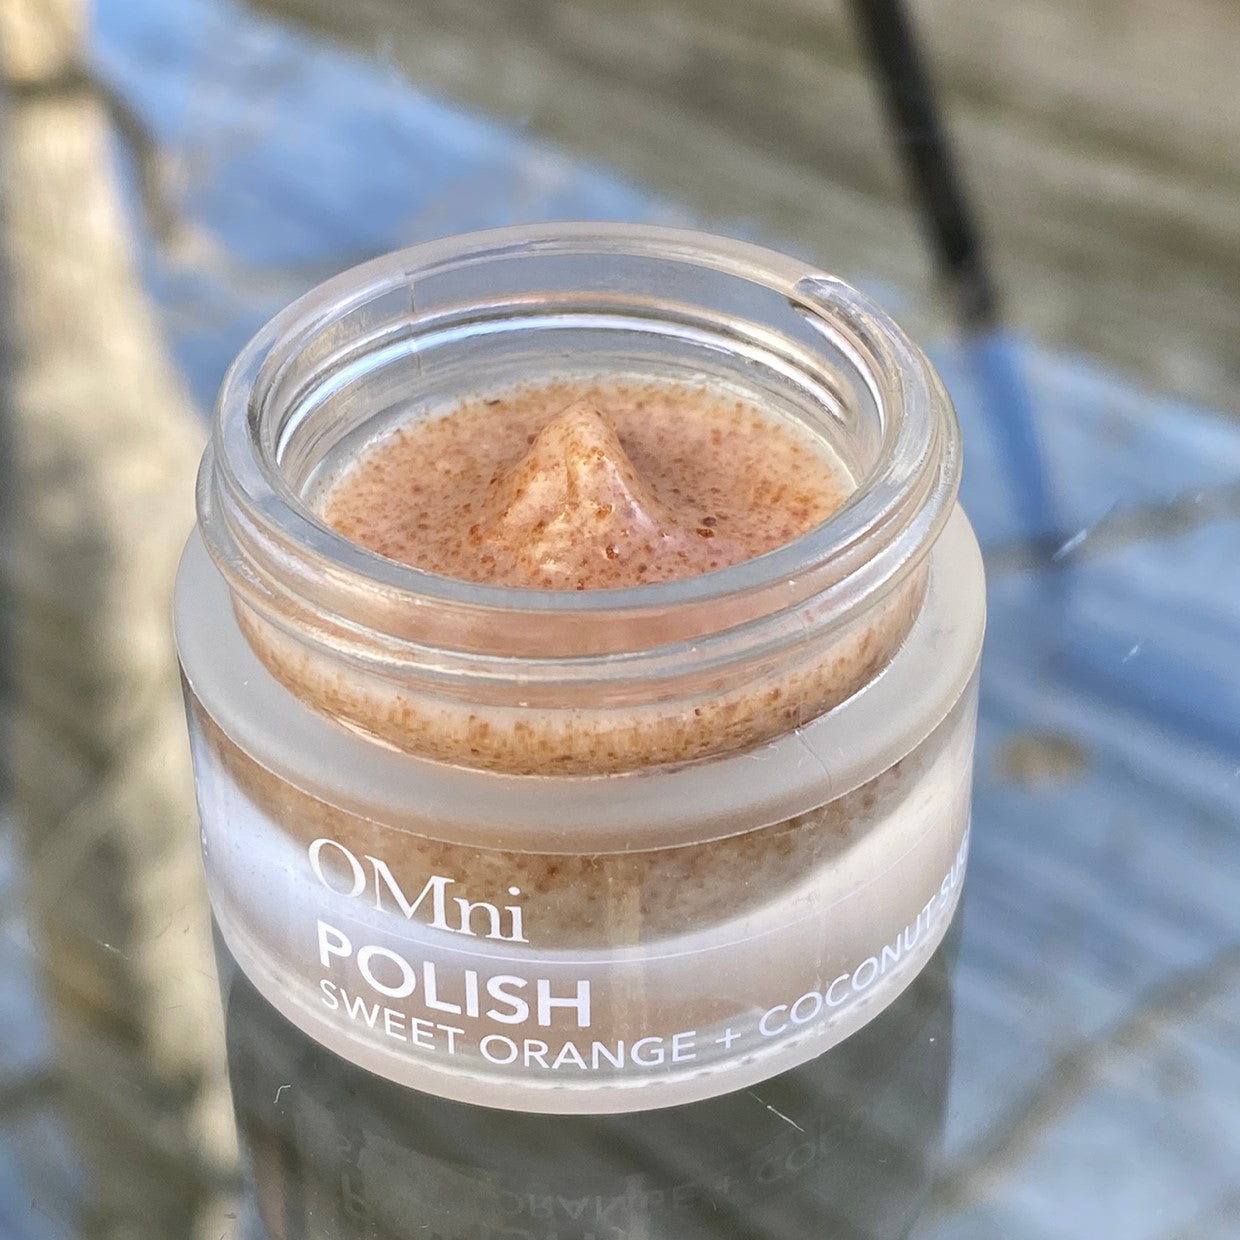 OMni Polish natural multi-use balm gently exfoliates dry lips and skin #3